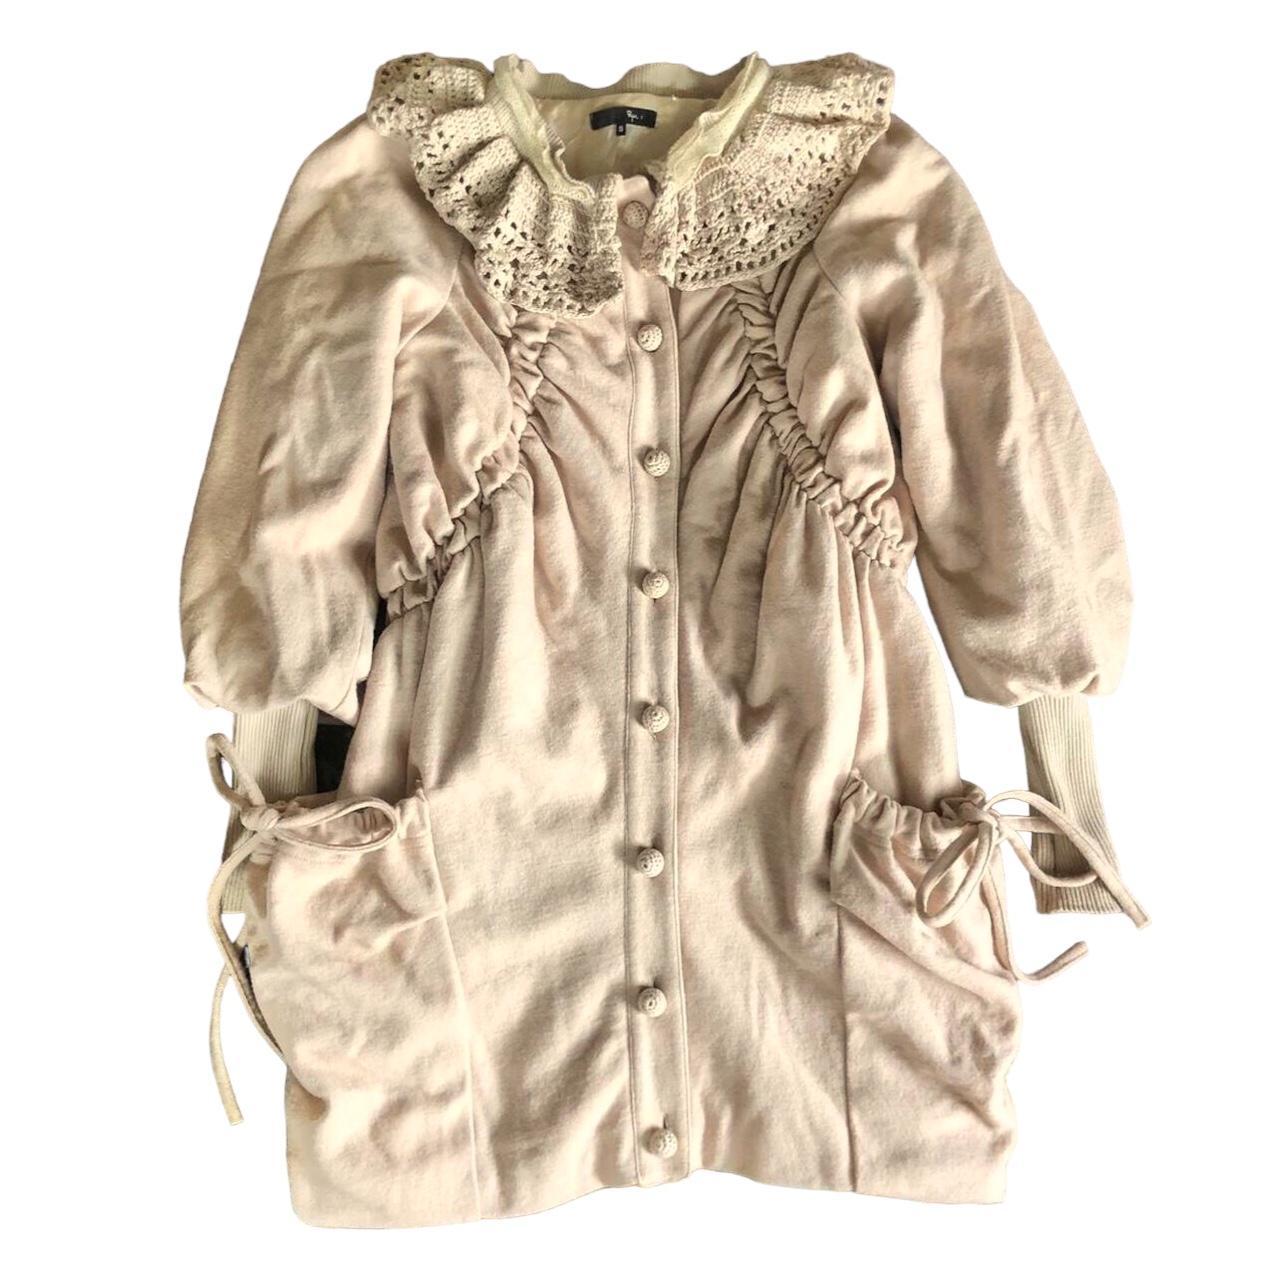 Rye Knit Ivory Jacket Size Small Womens Long Cream... - Depop